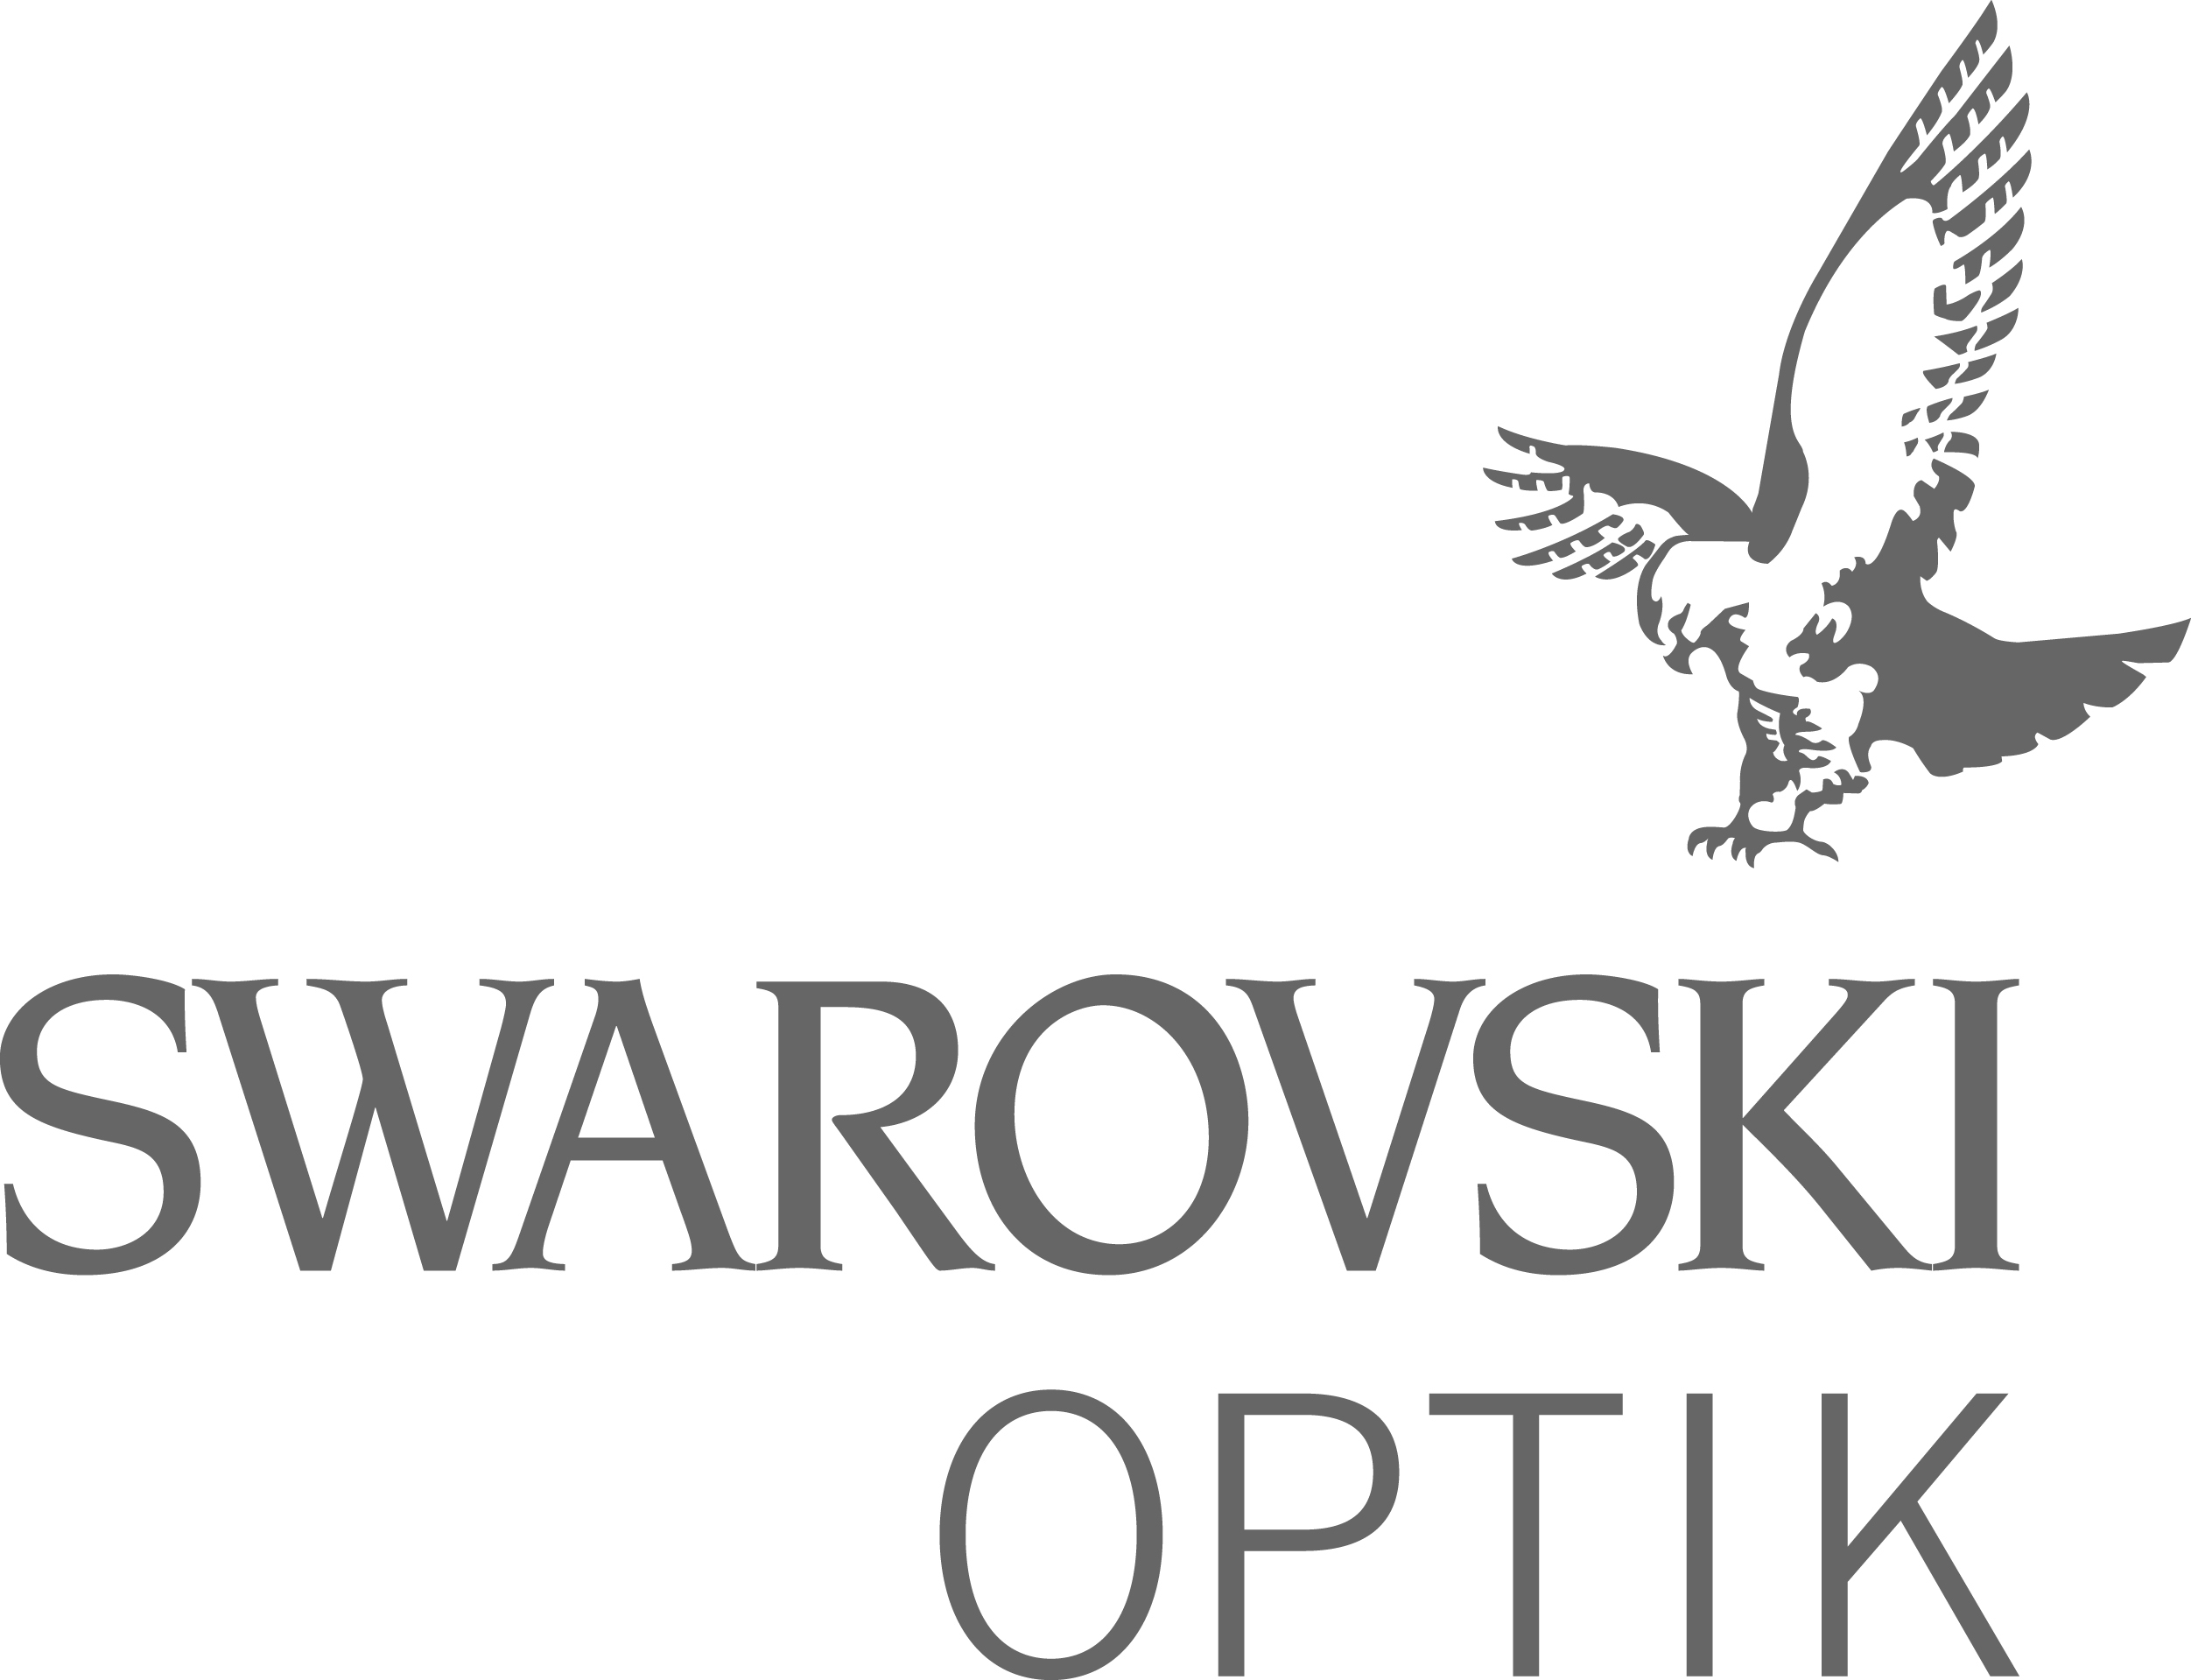 Swarovski-Optik-refine-1_TradeGothic100%